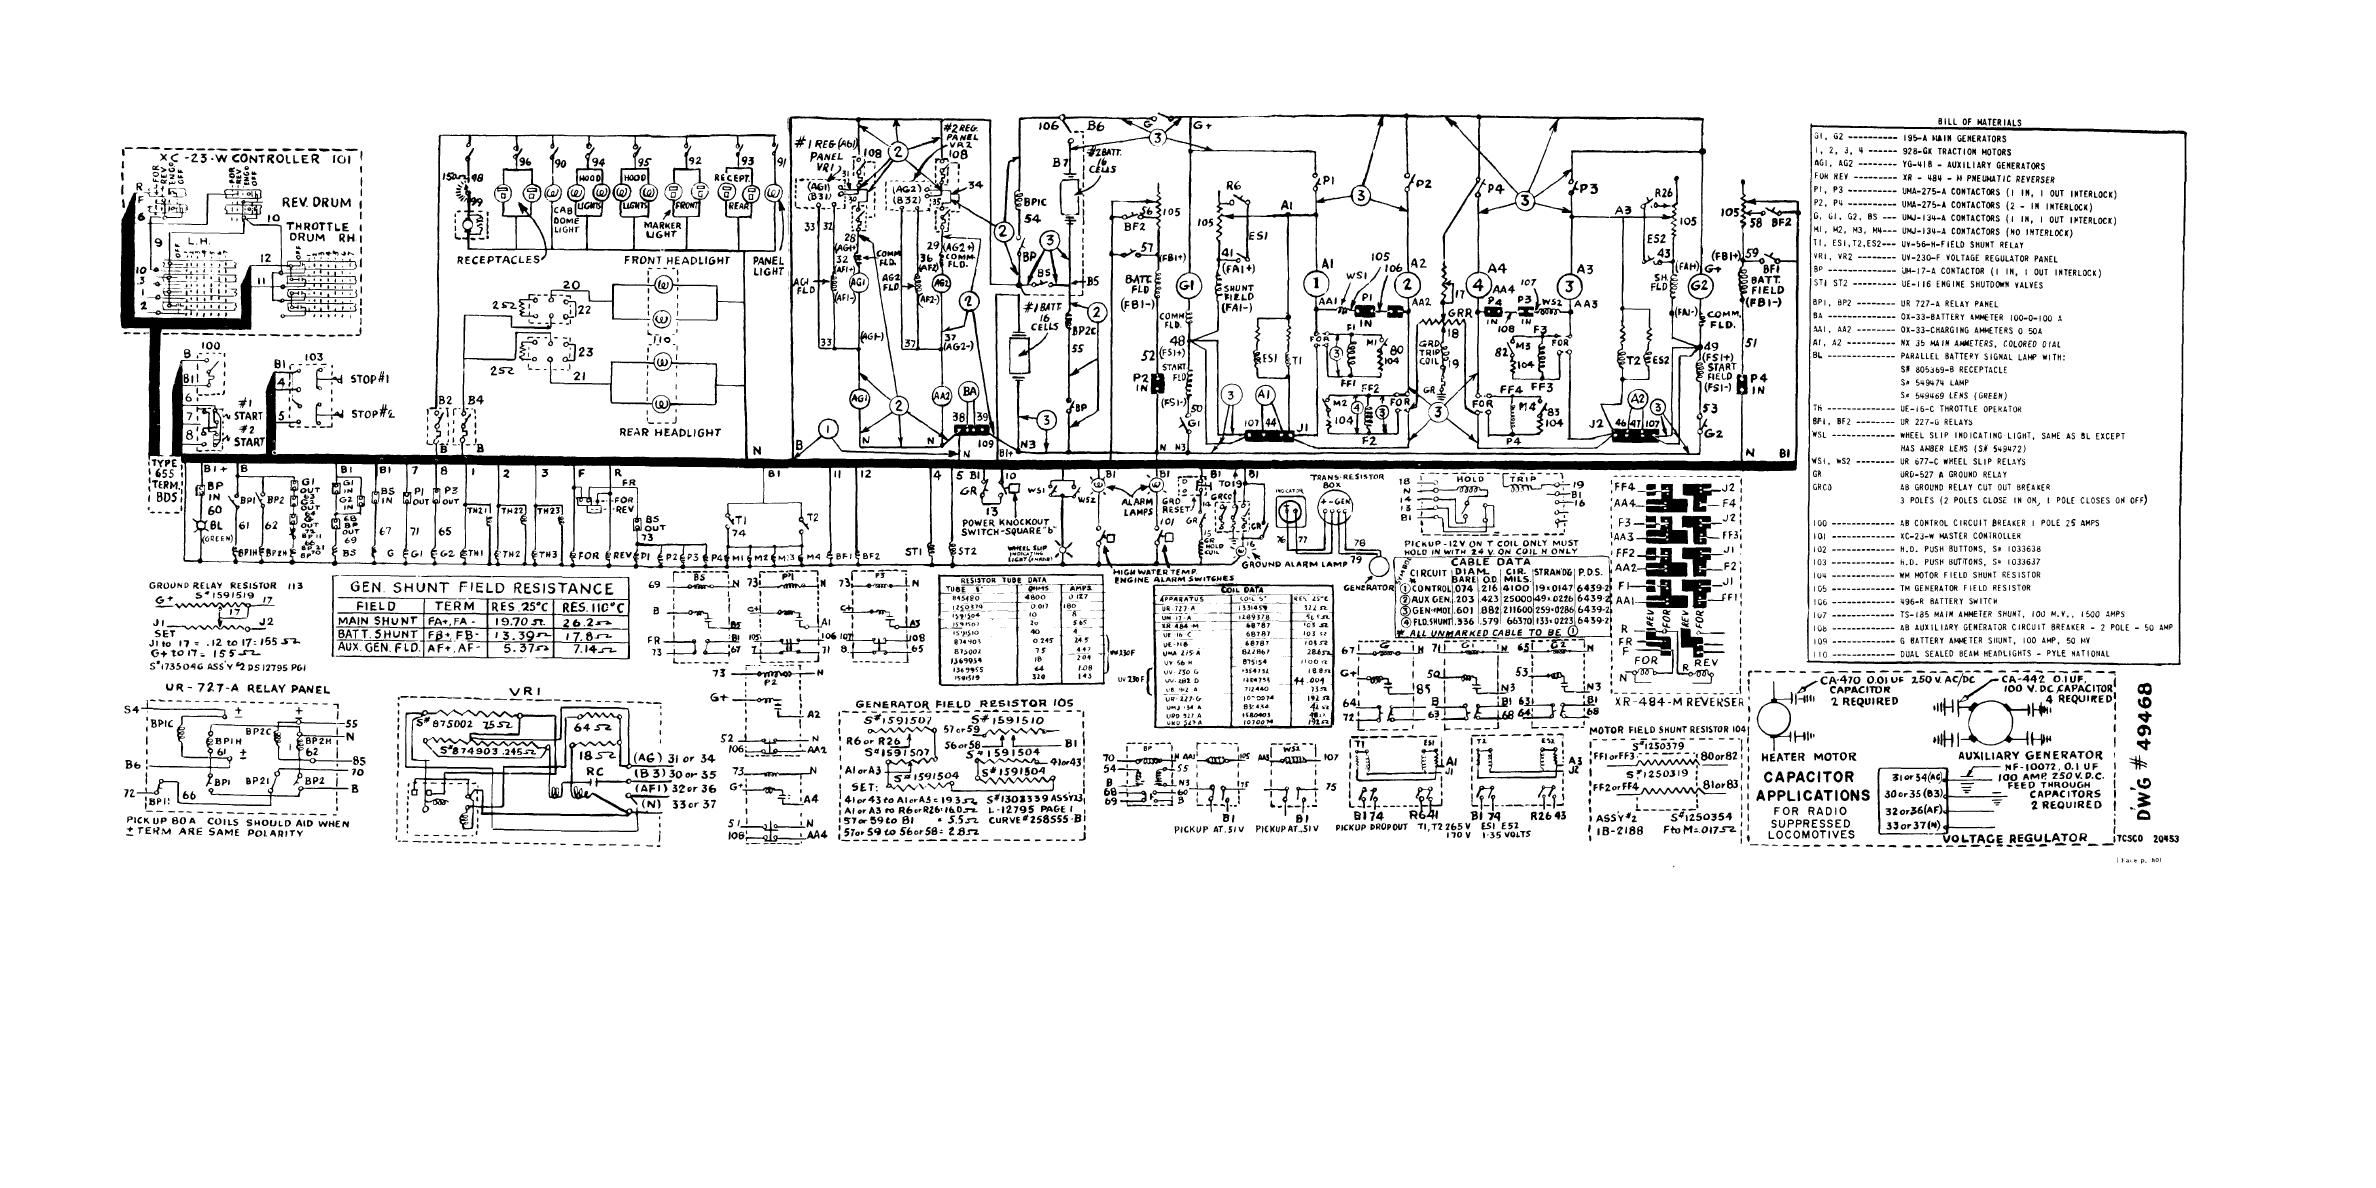 Figure 44. Locomotive wiring diagram.